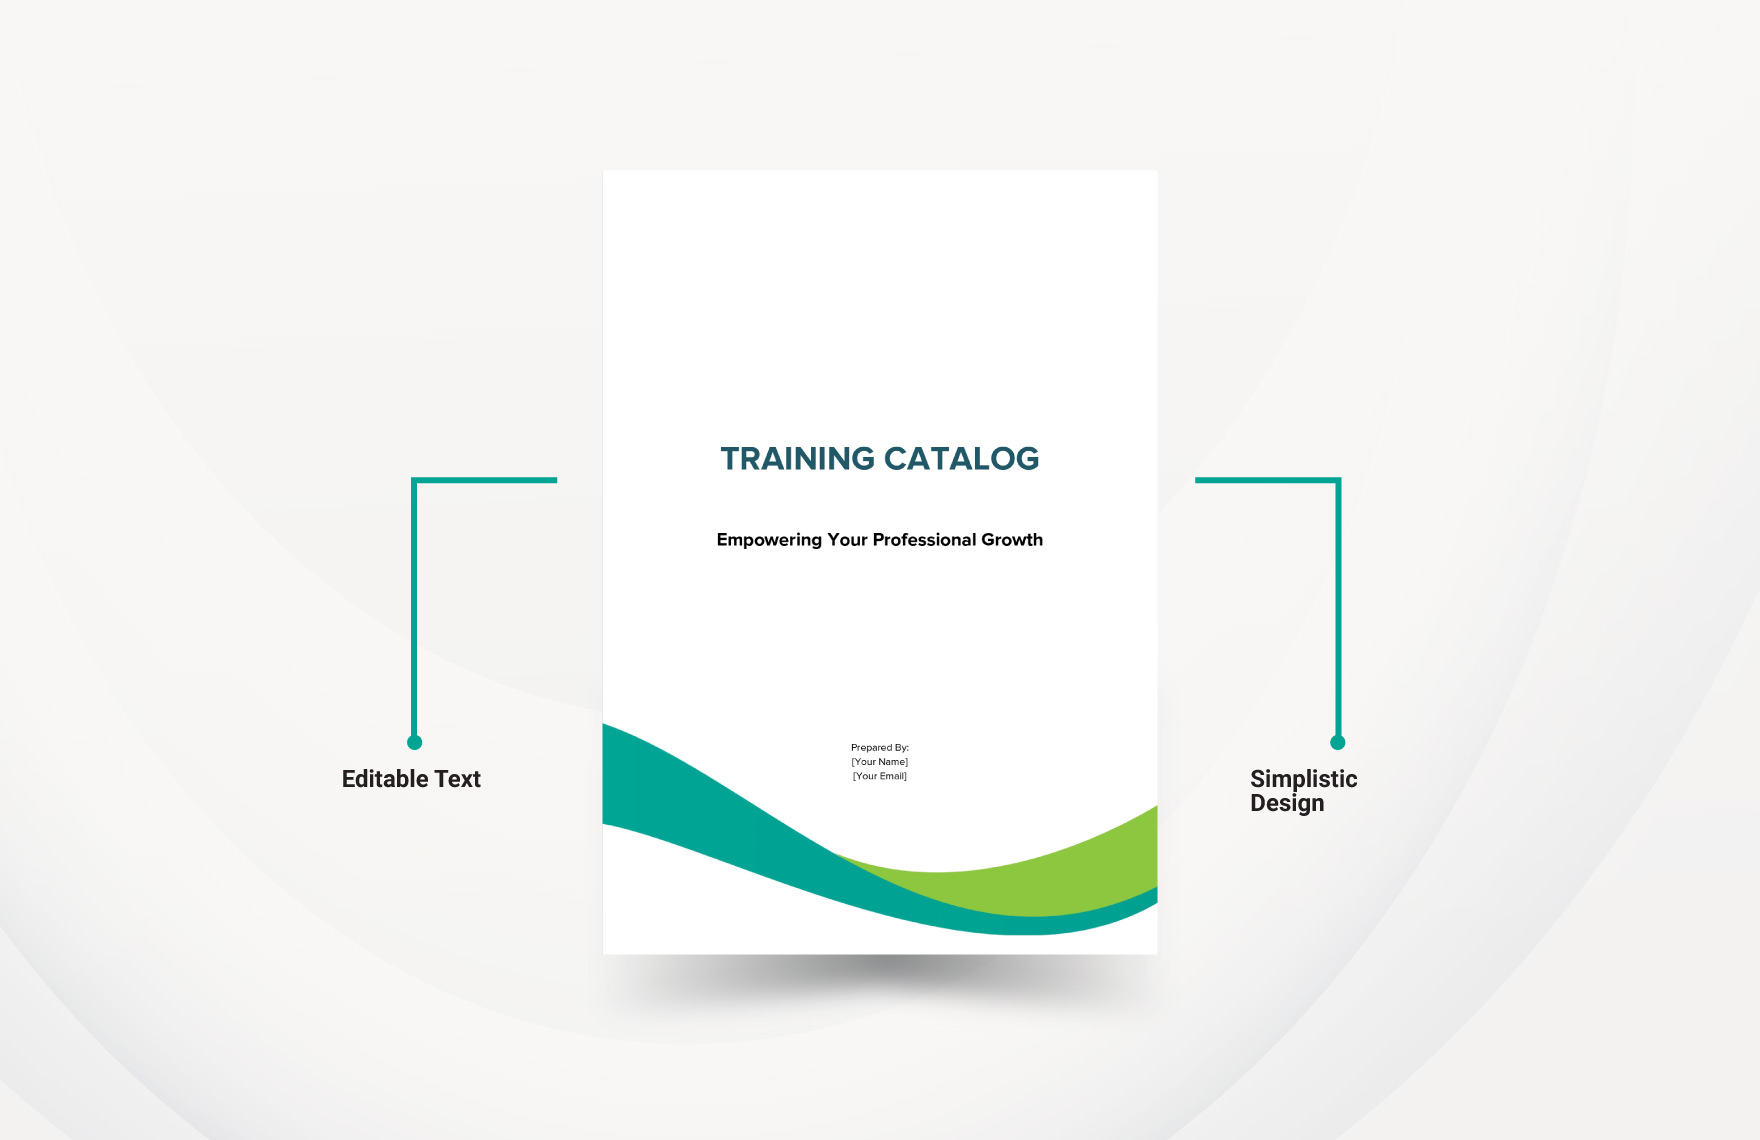 Training Catalog Template